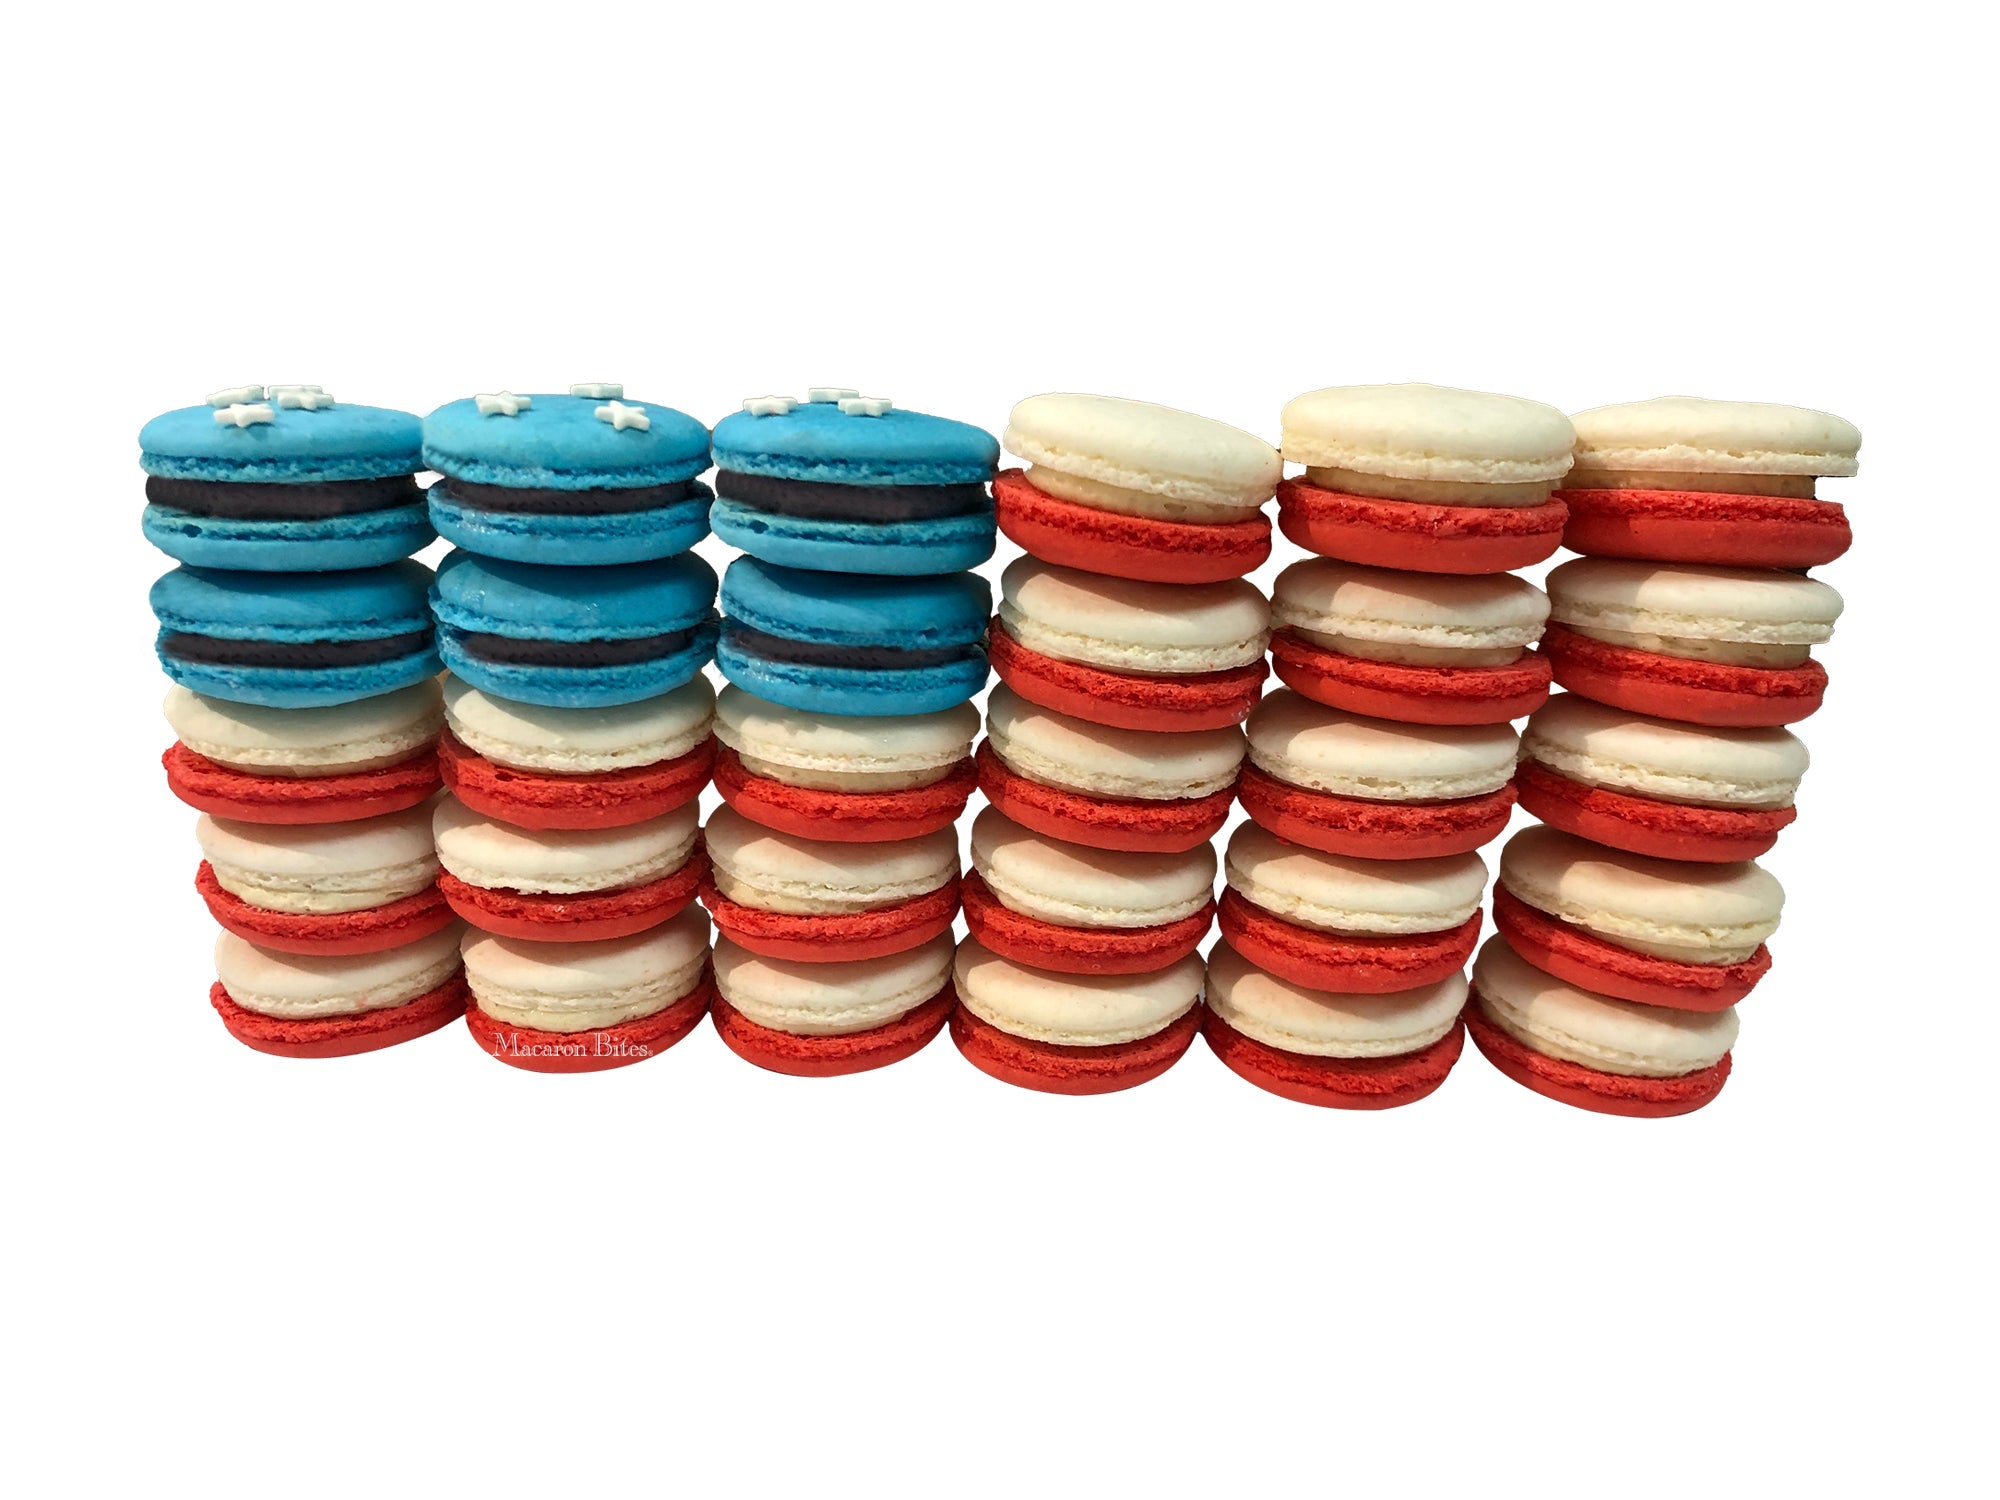 Macaron Gift Box of 36 - The American Flag